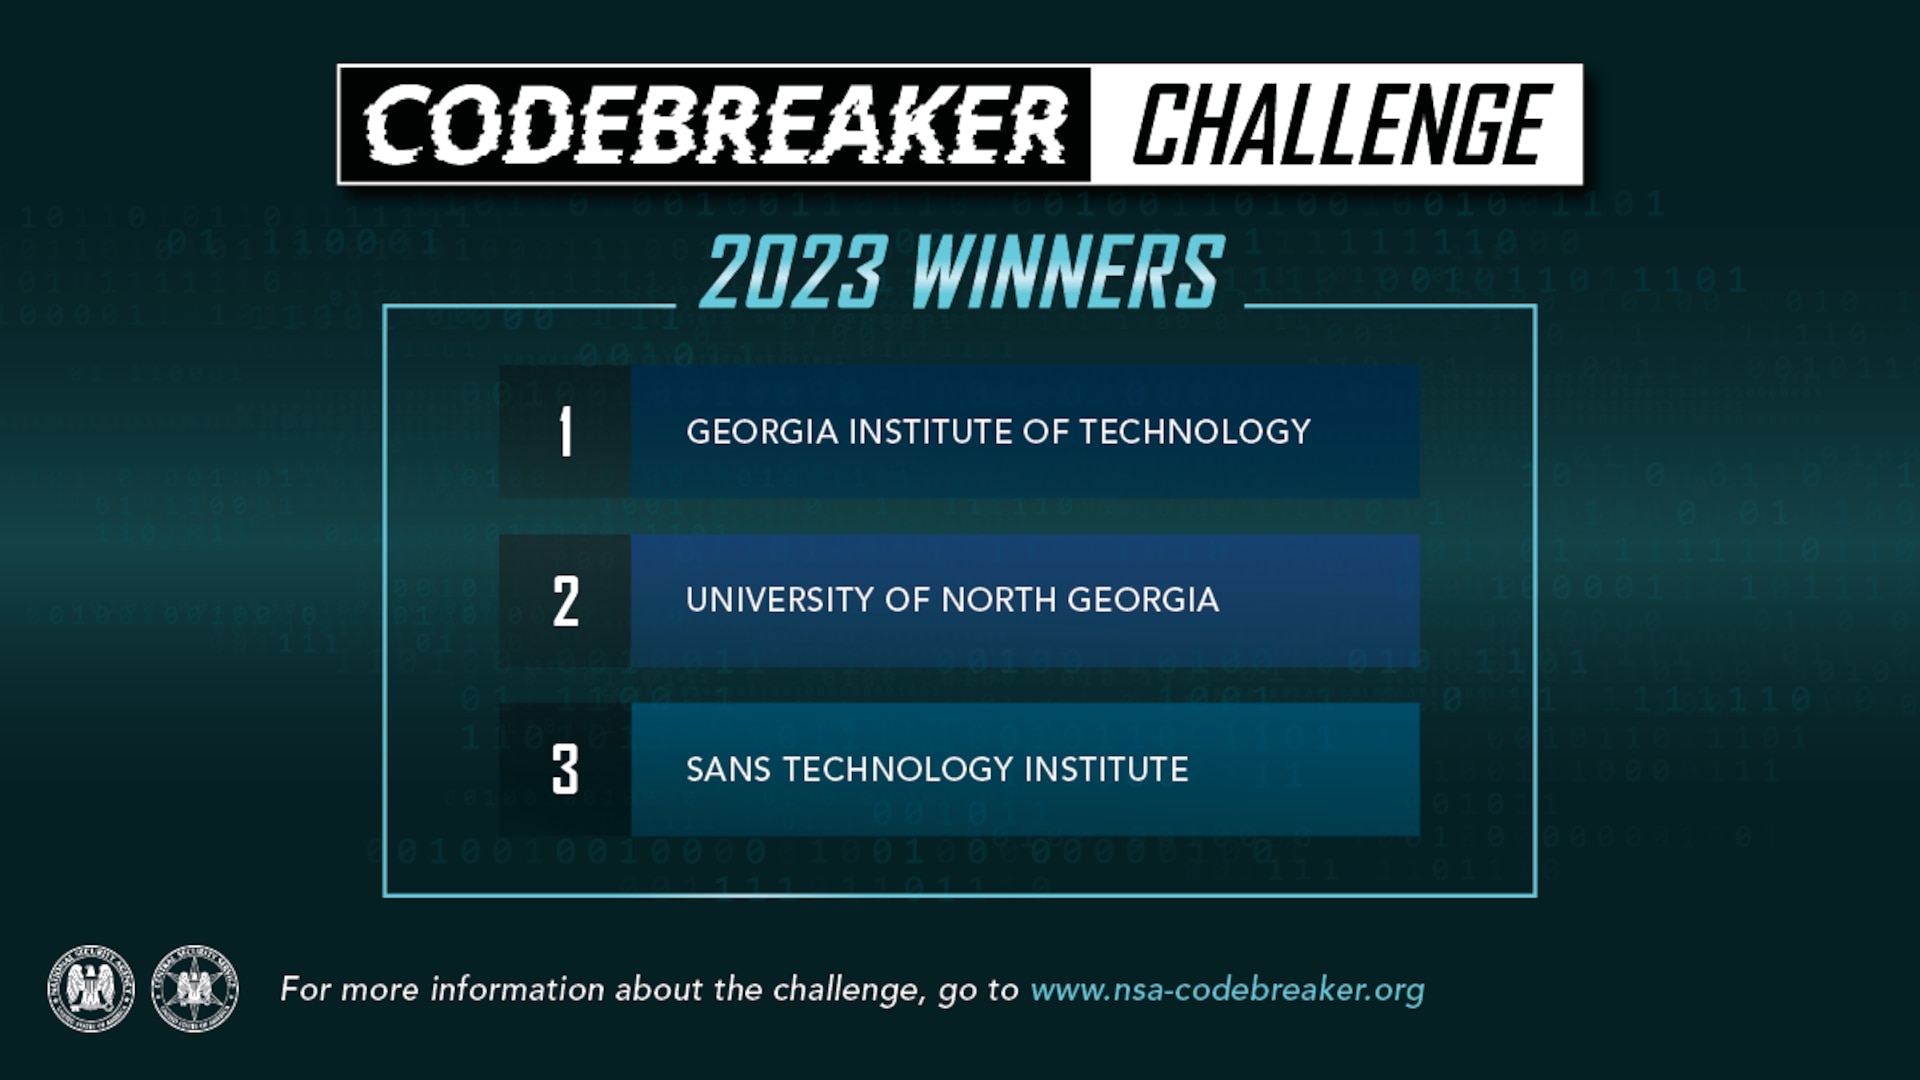 NSA Codebreaker Challenge 2023 Winners: Georgia Institute of Technology, University of North Georgia, SANS Technology Institute